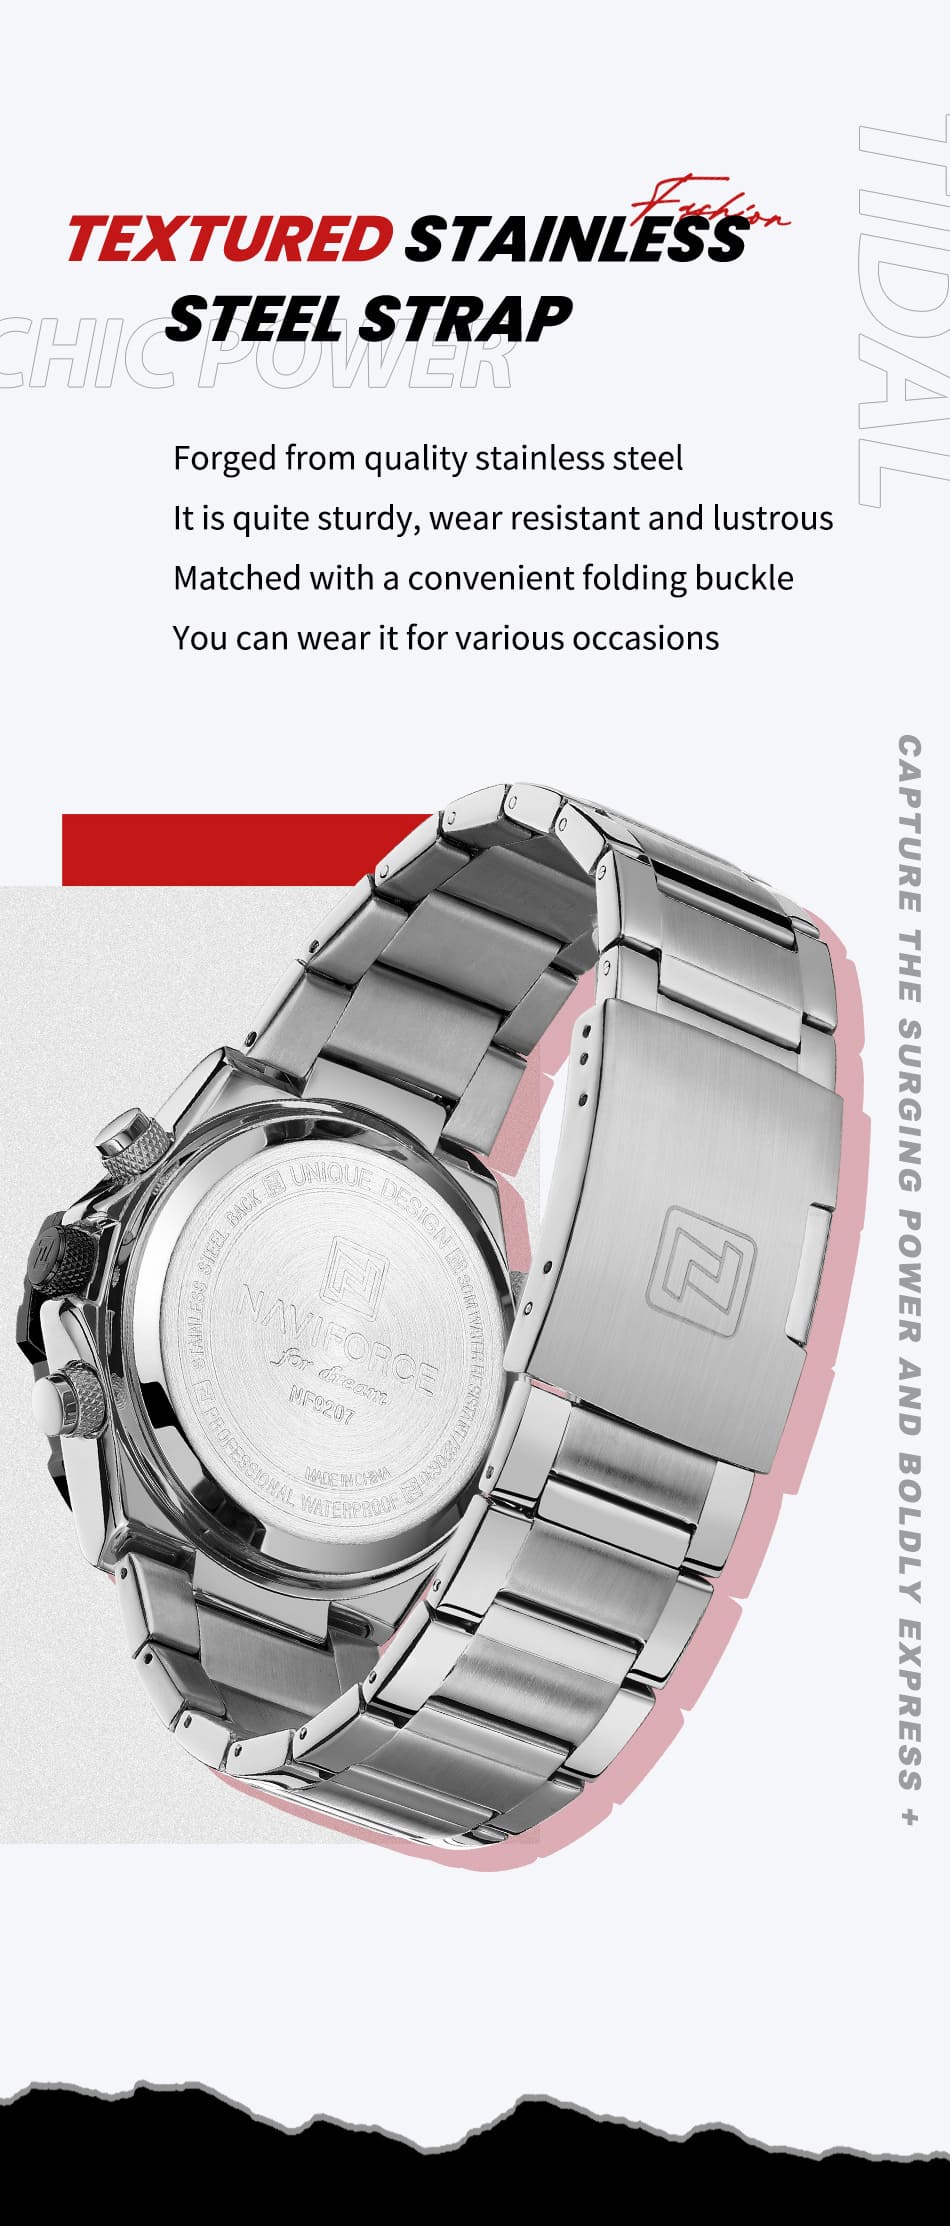 Naviforce Men's Watch NF9207 S B GN | Watches Prime